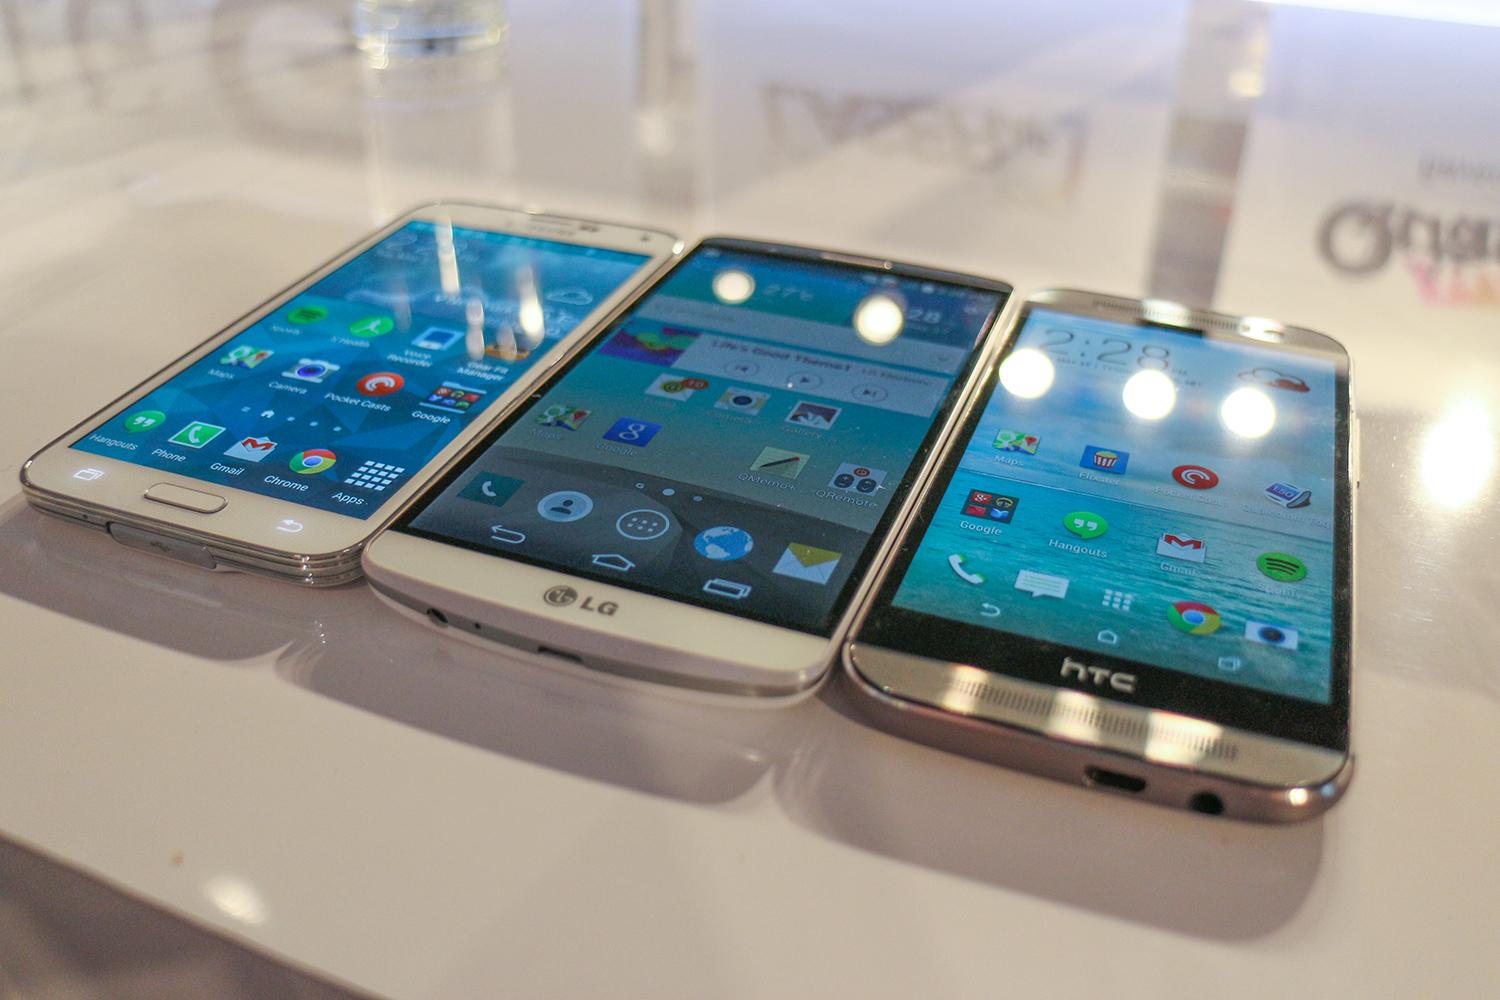 LG G3 vs. Galaxy S5 vs. HTC One M8